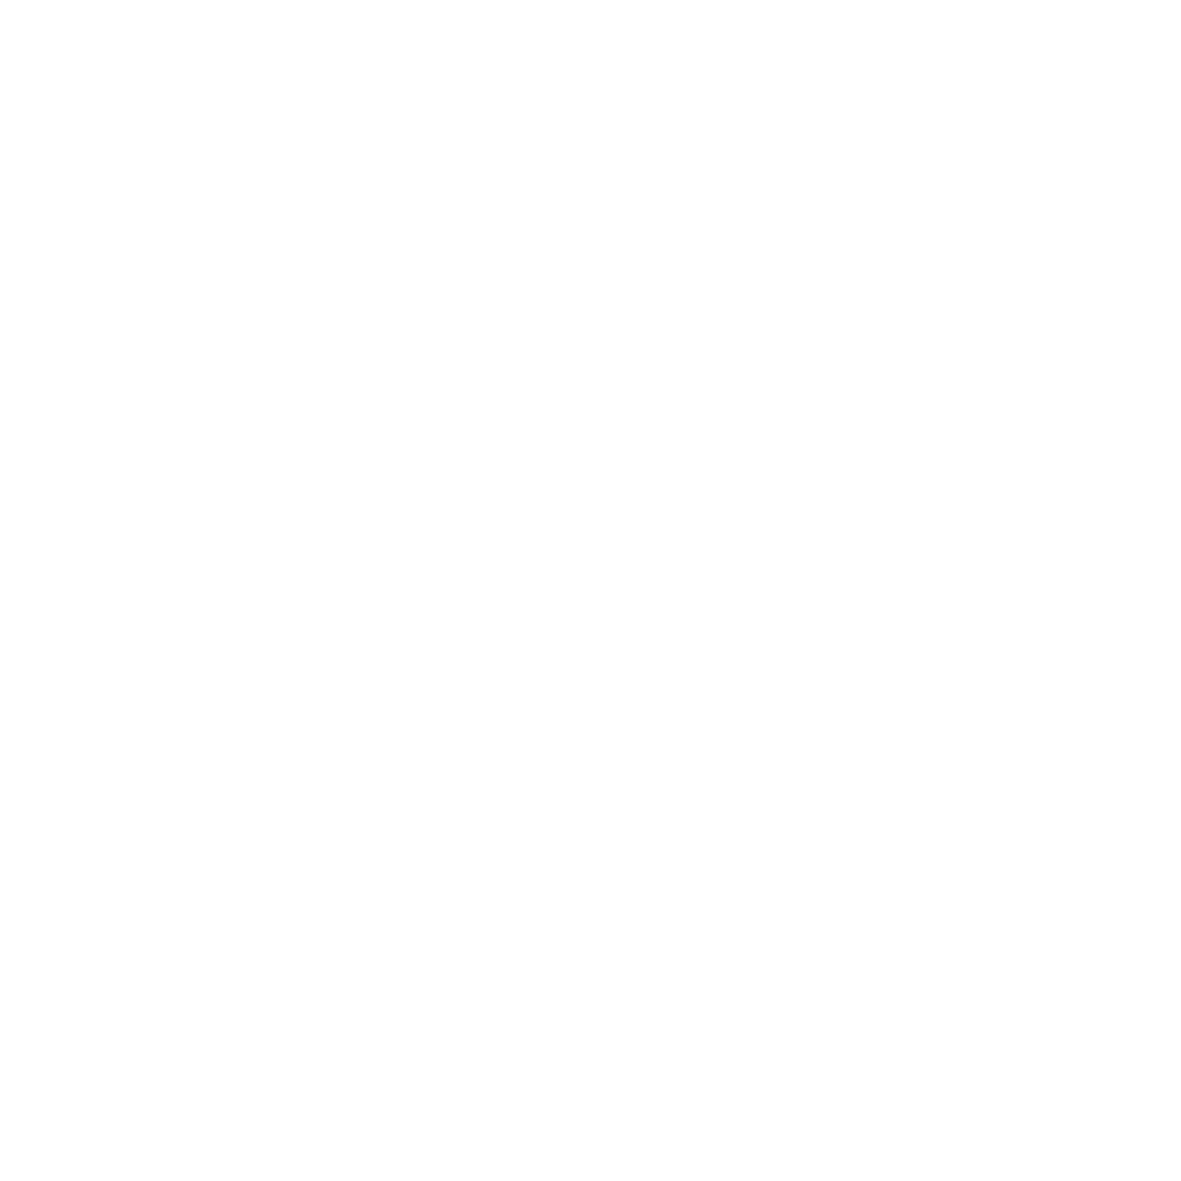 Music 4 the Next Generation